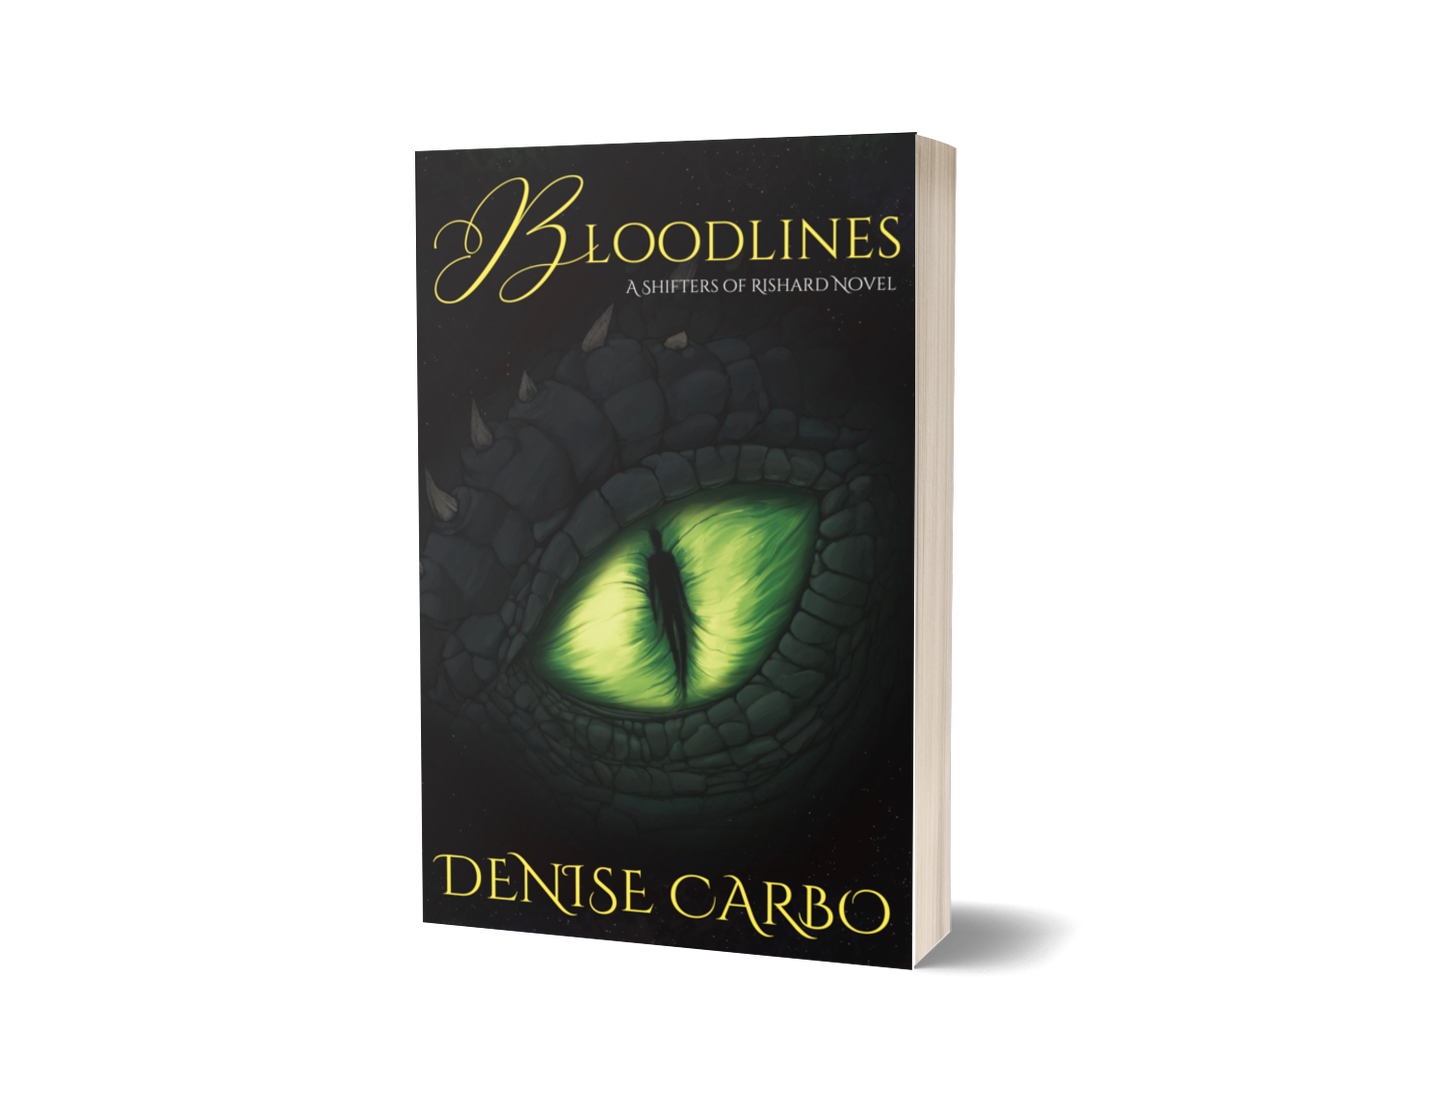 Bloodlines paperback cover